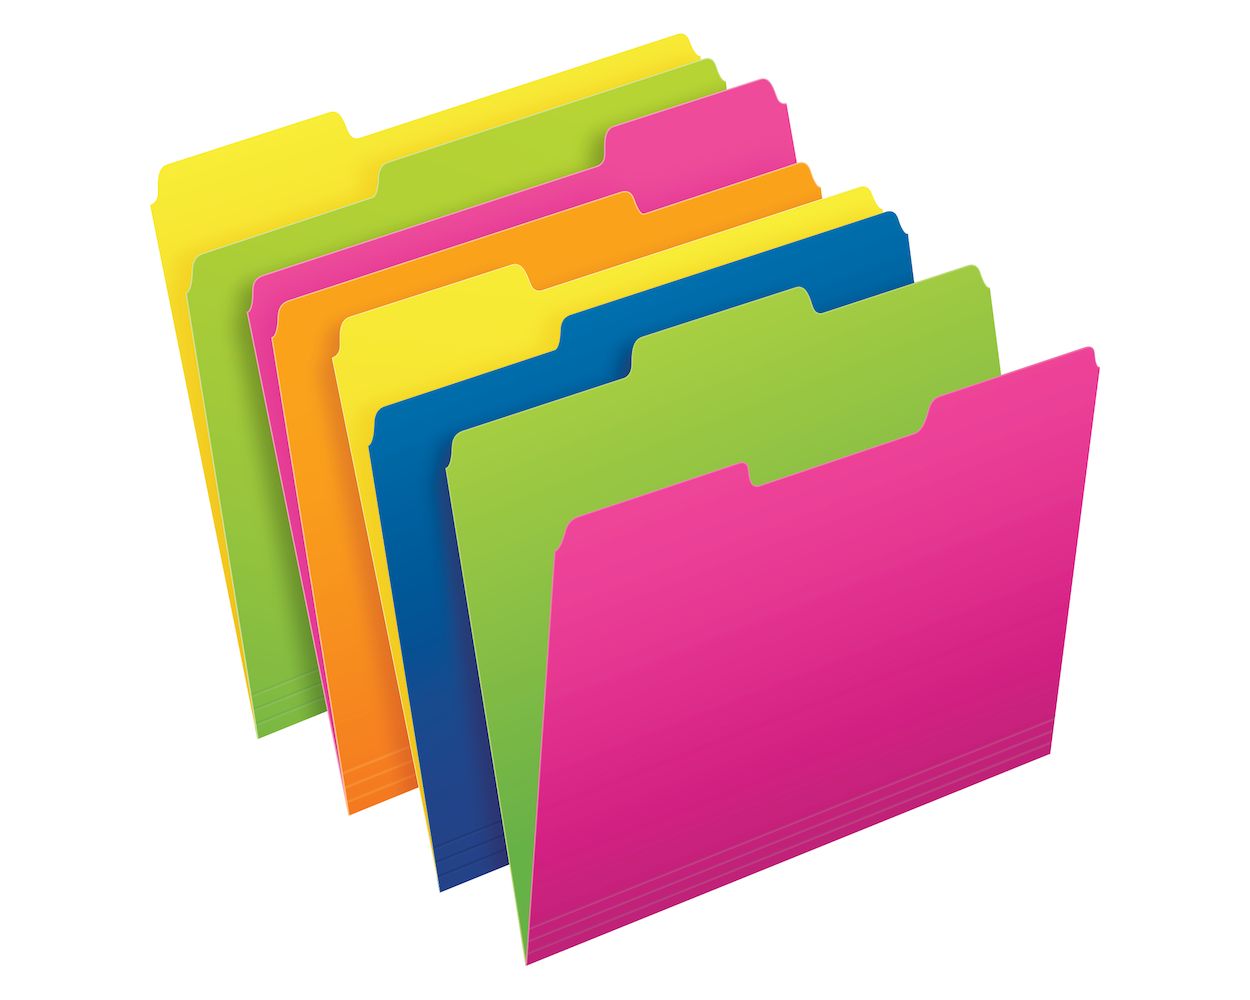 100 per Box Pack of 2 Assorted Colors Pendaflex Two-Tone Color File Folders 1/3 Cut 152 1/3 ASST Letter Size